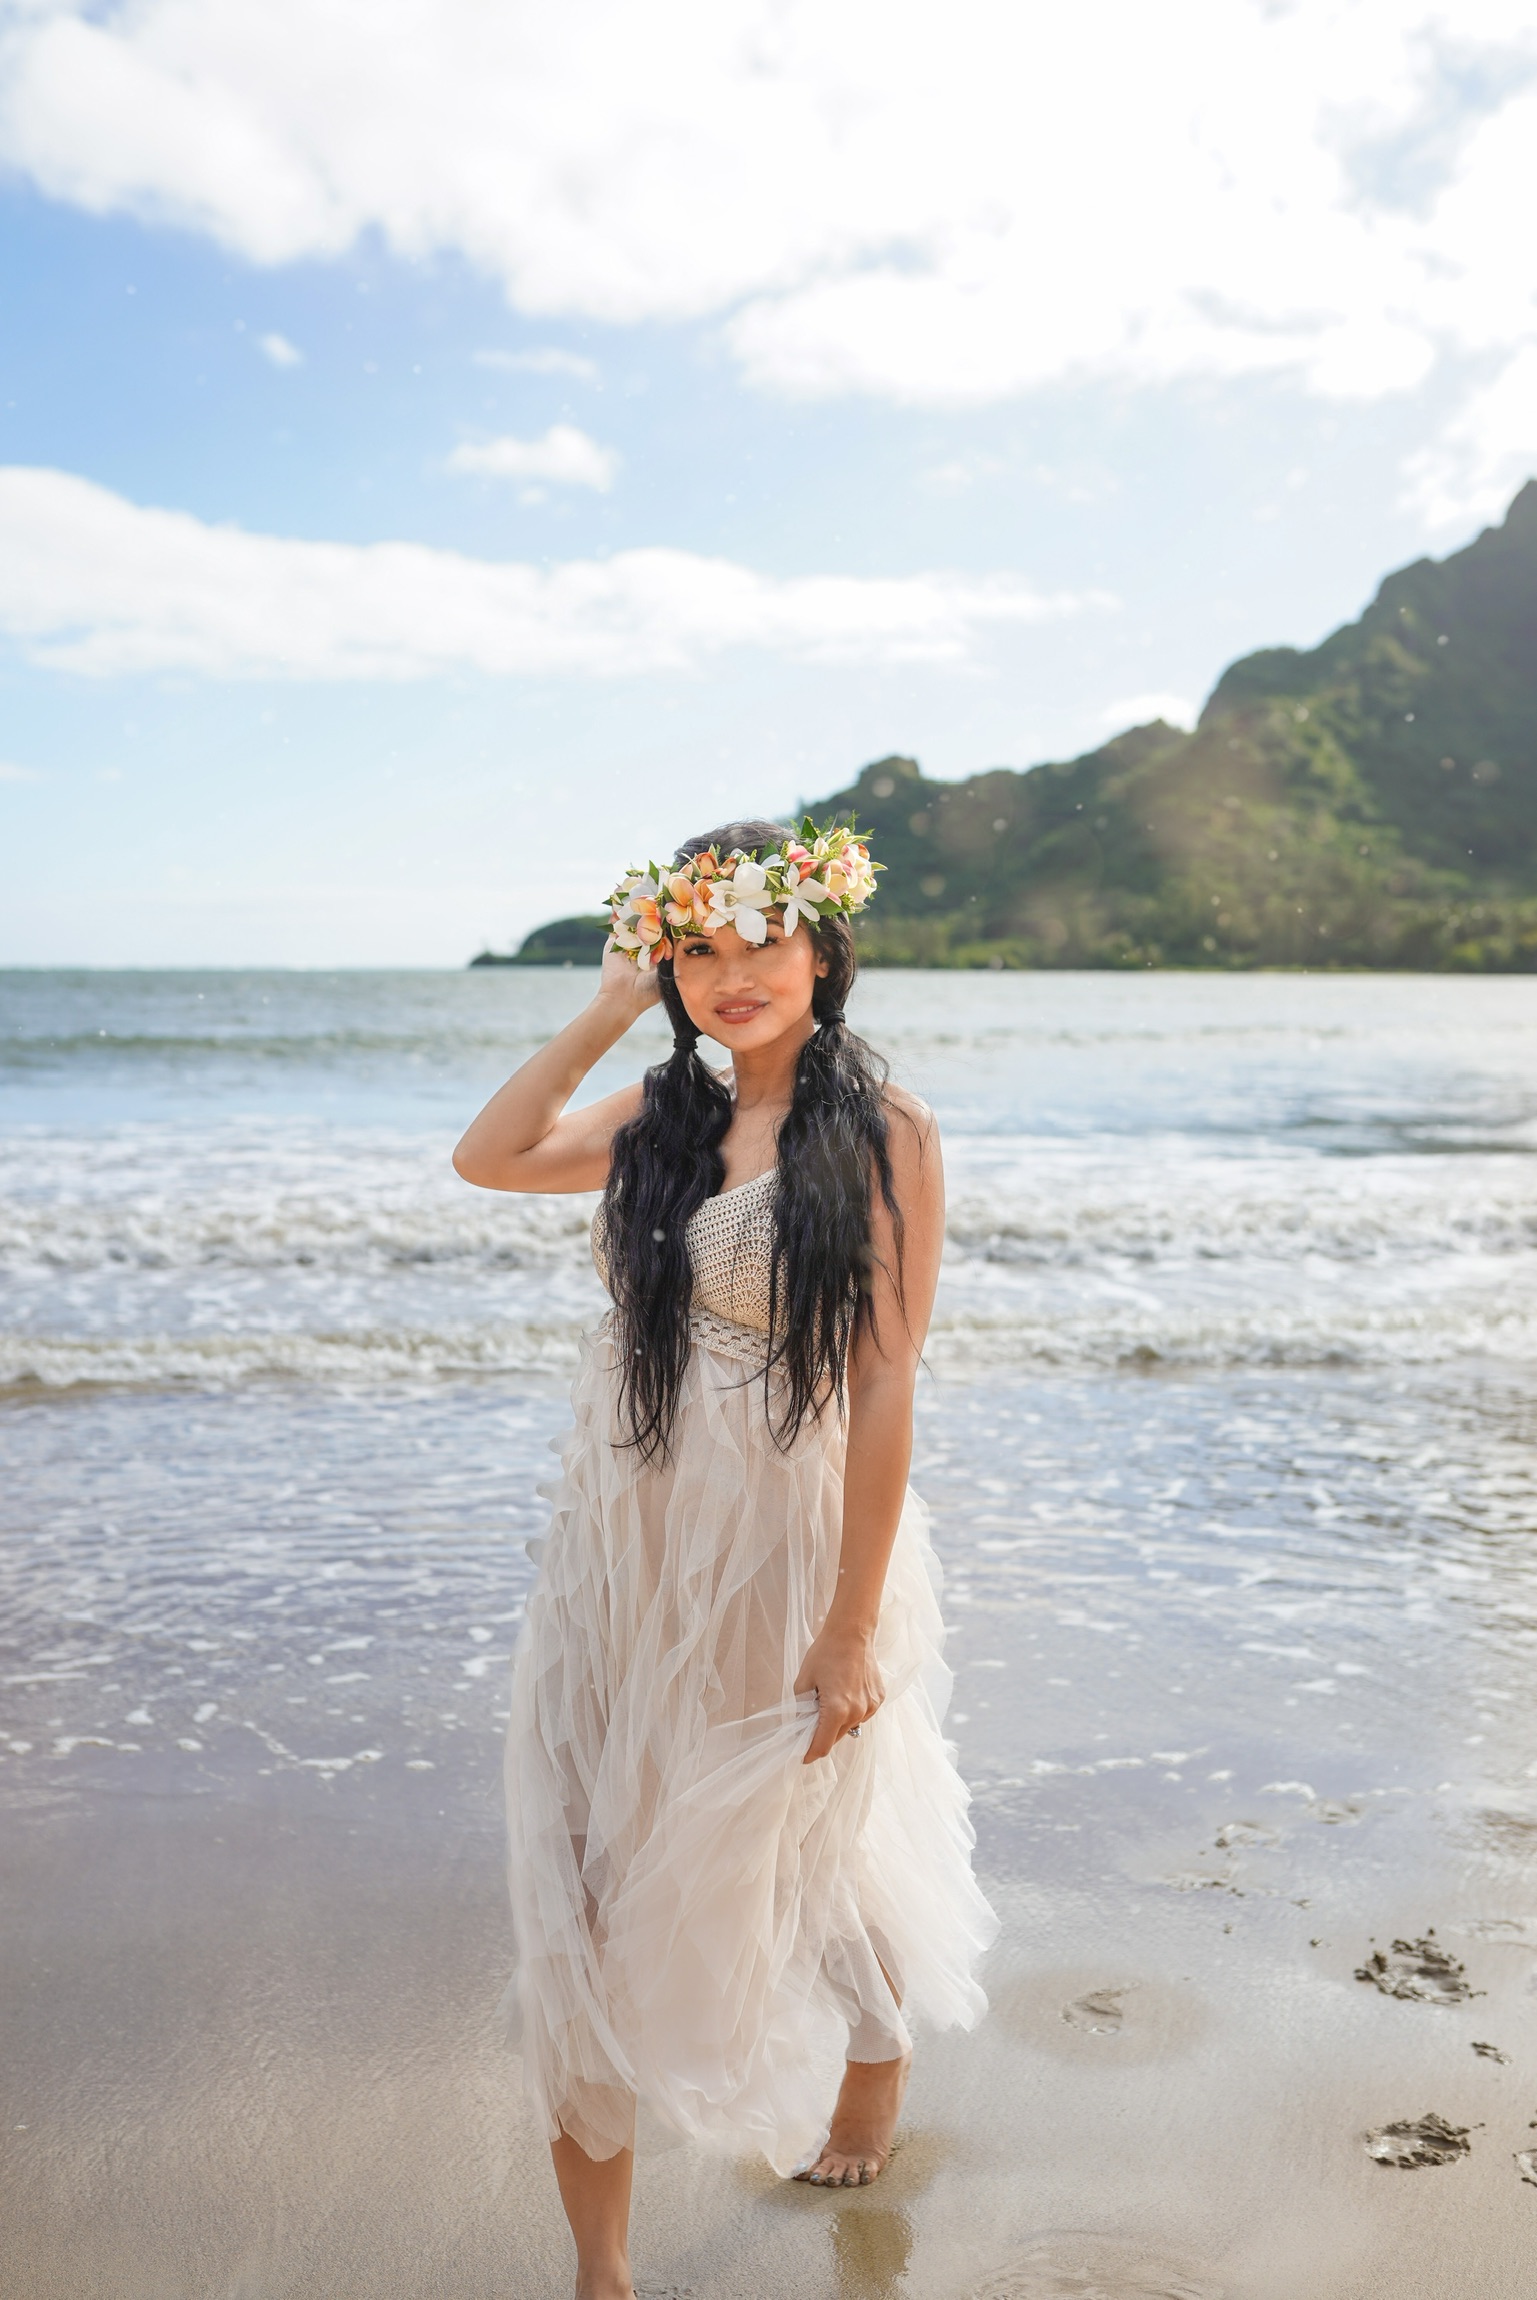 Kahana Bay Beach, Hawaii, haku lei, flower crown, beach photos 